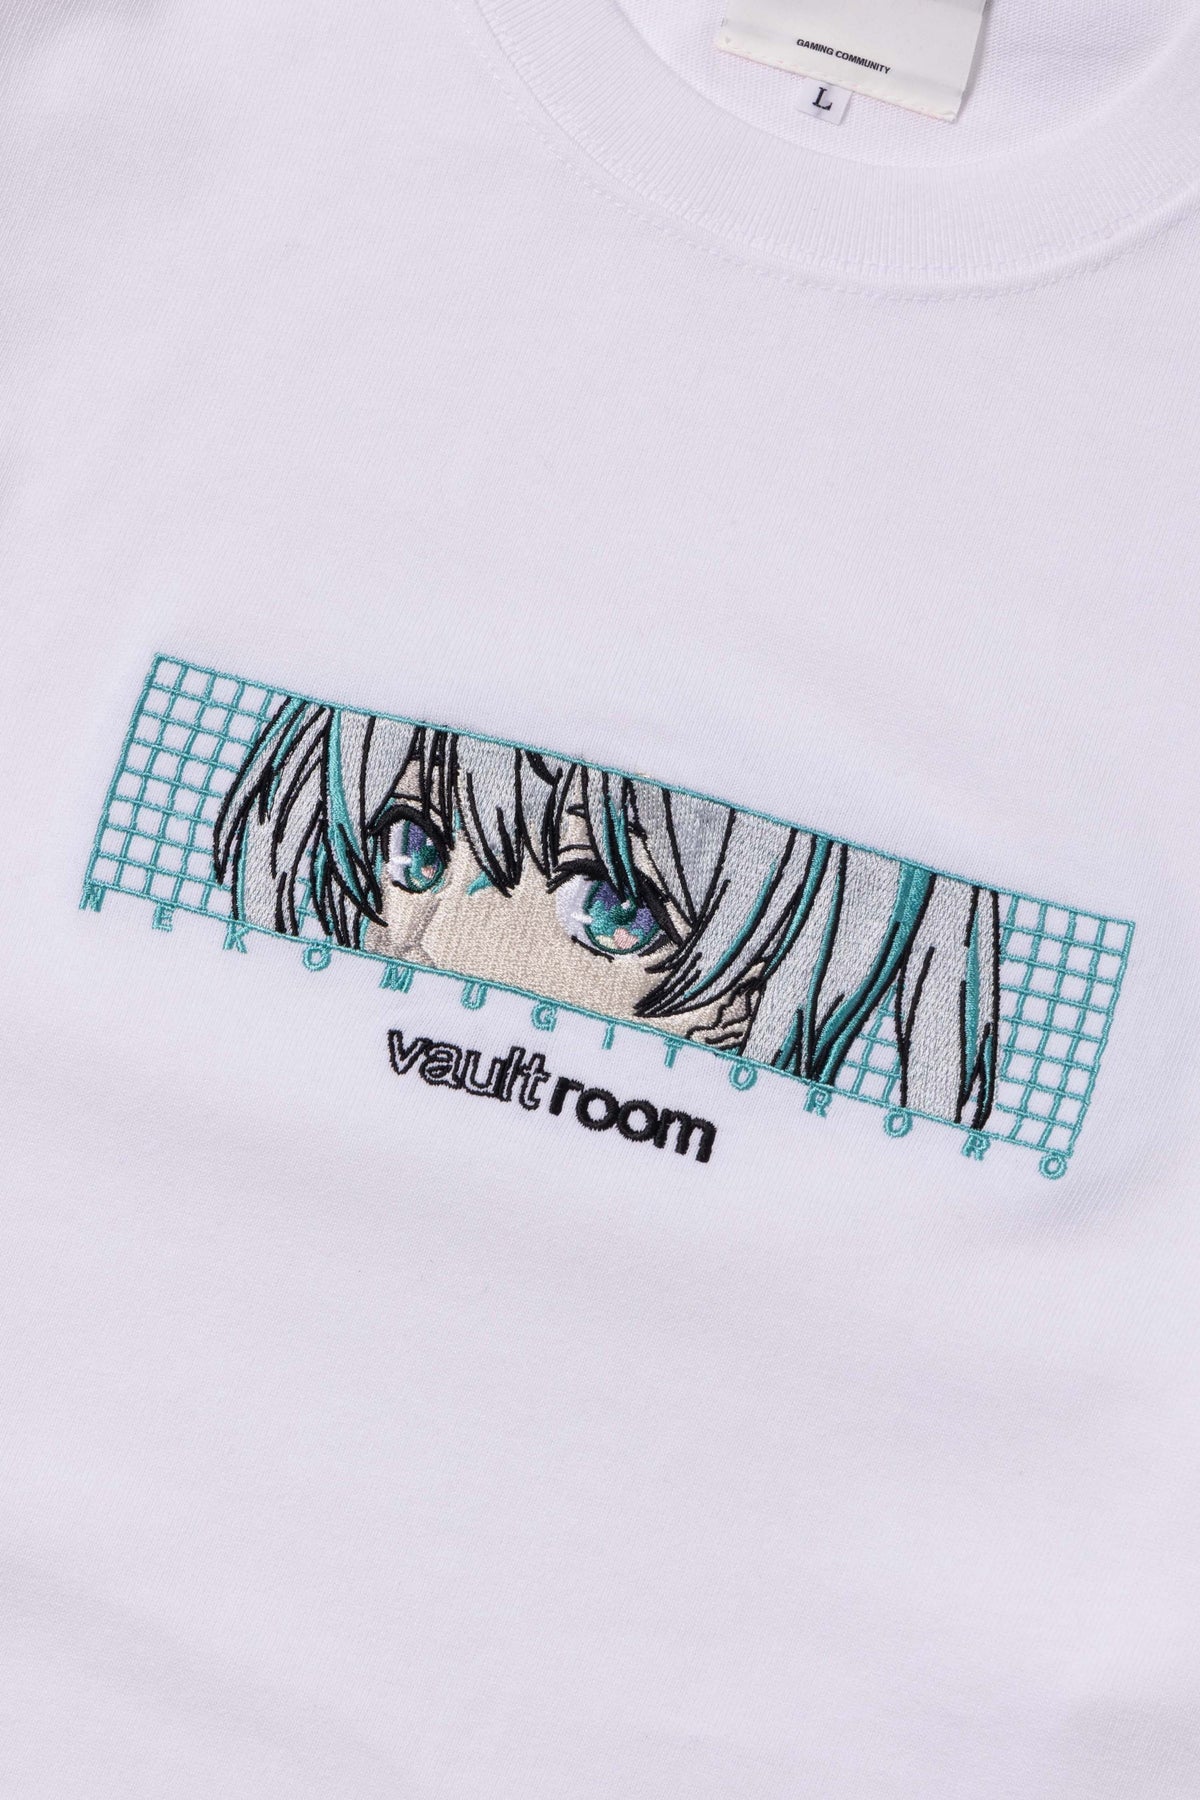 Vaultroom × tororo Tシャツ Lサイズ